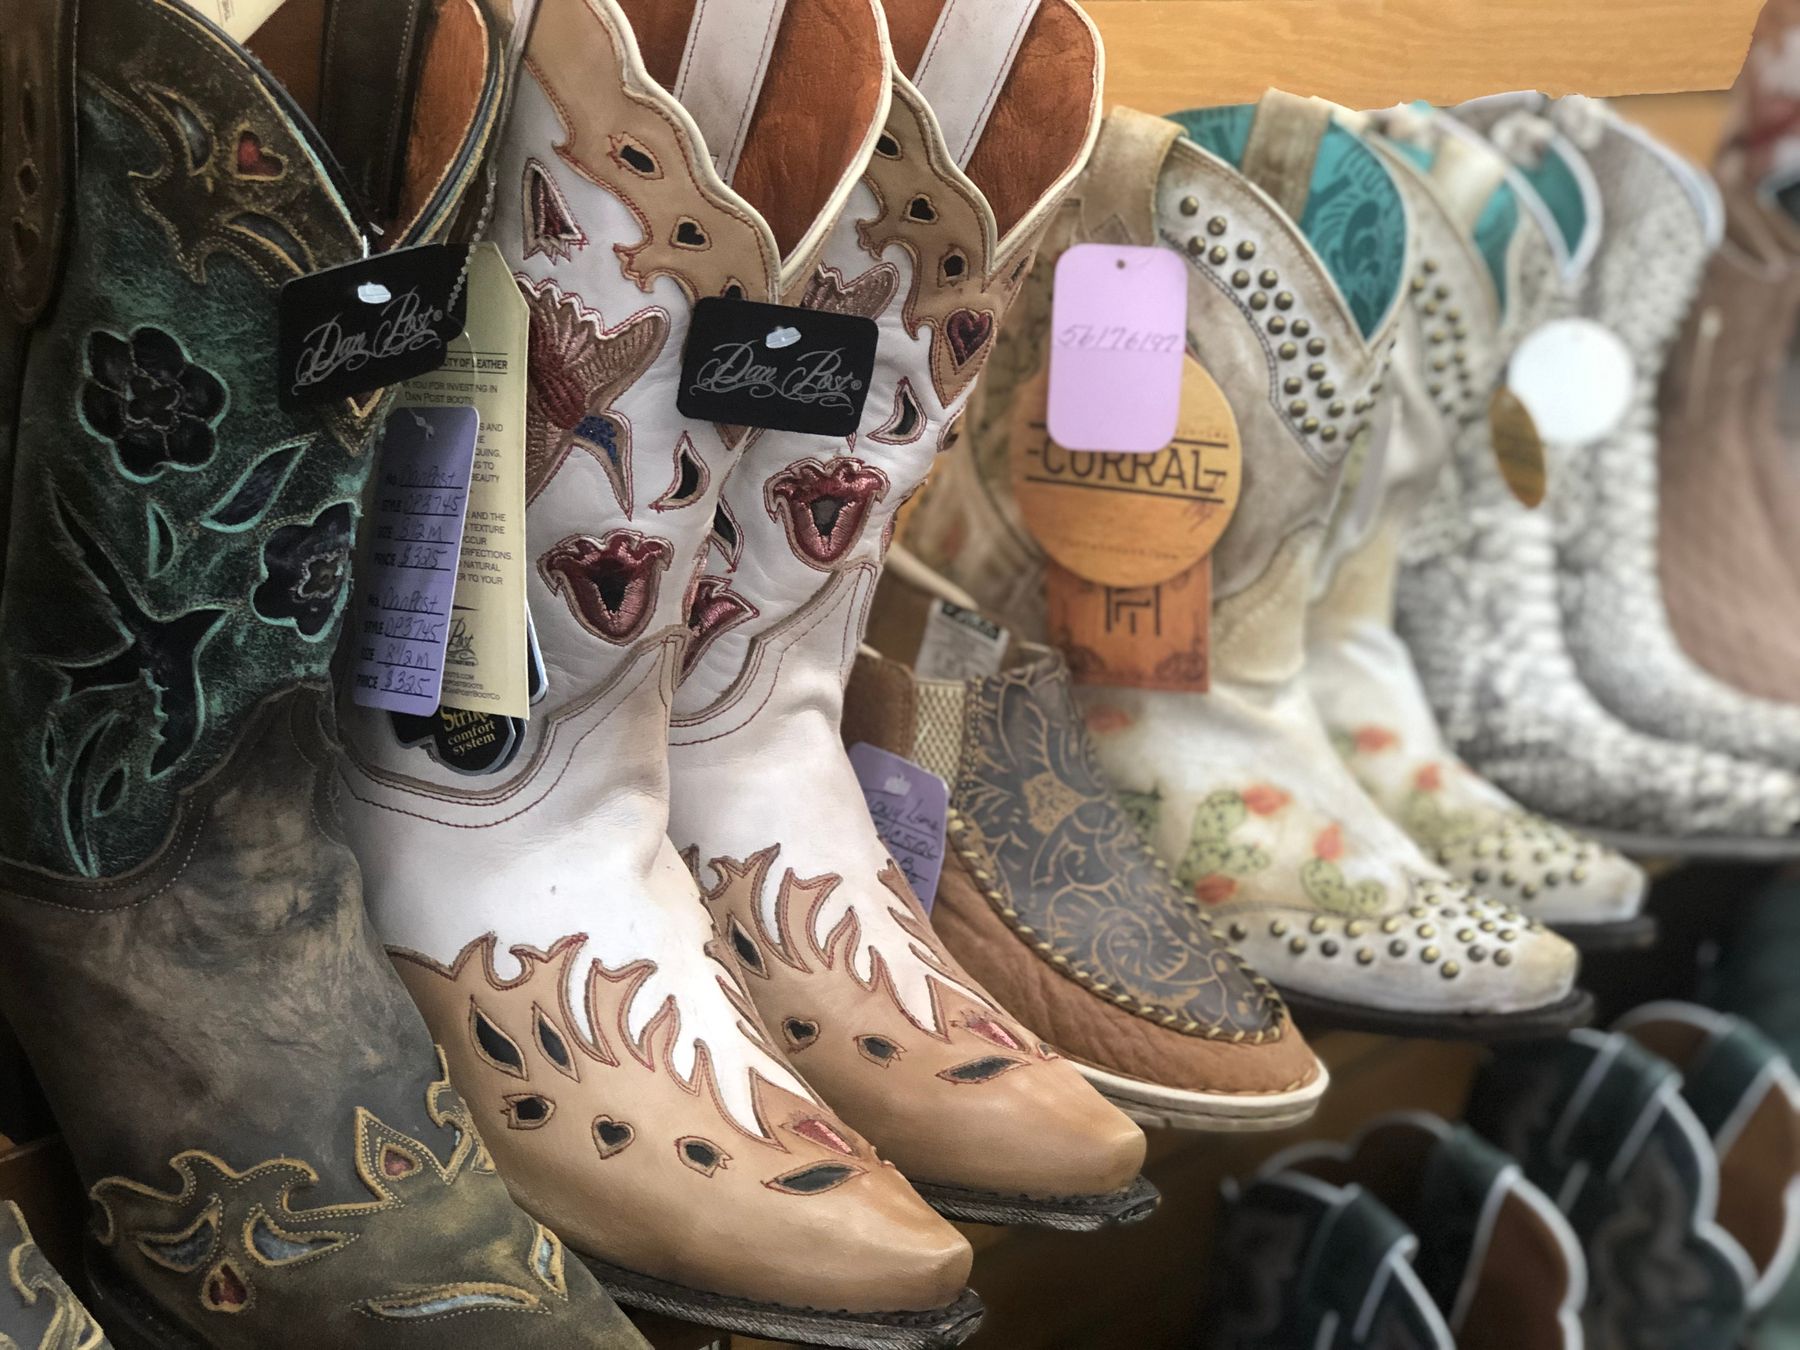 Cowboy Boots & Western Wear